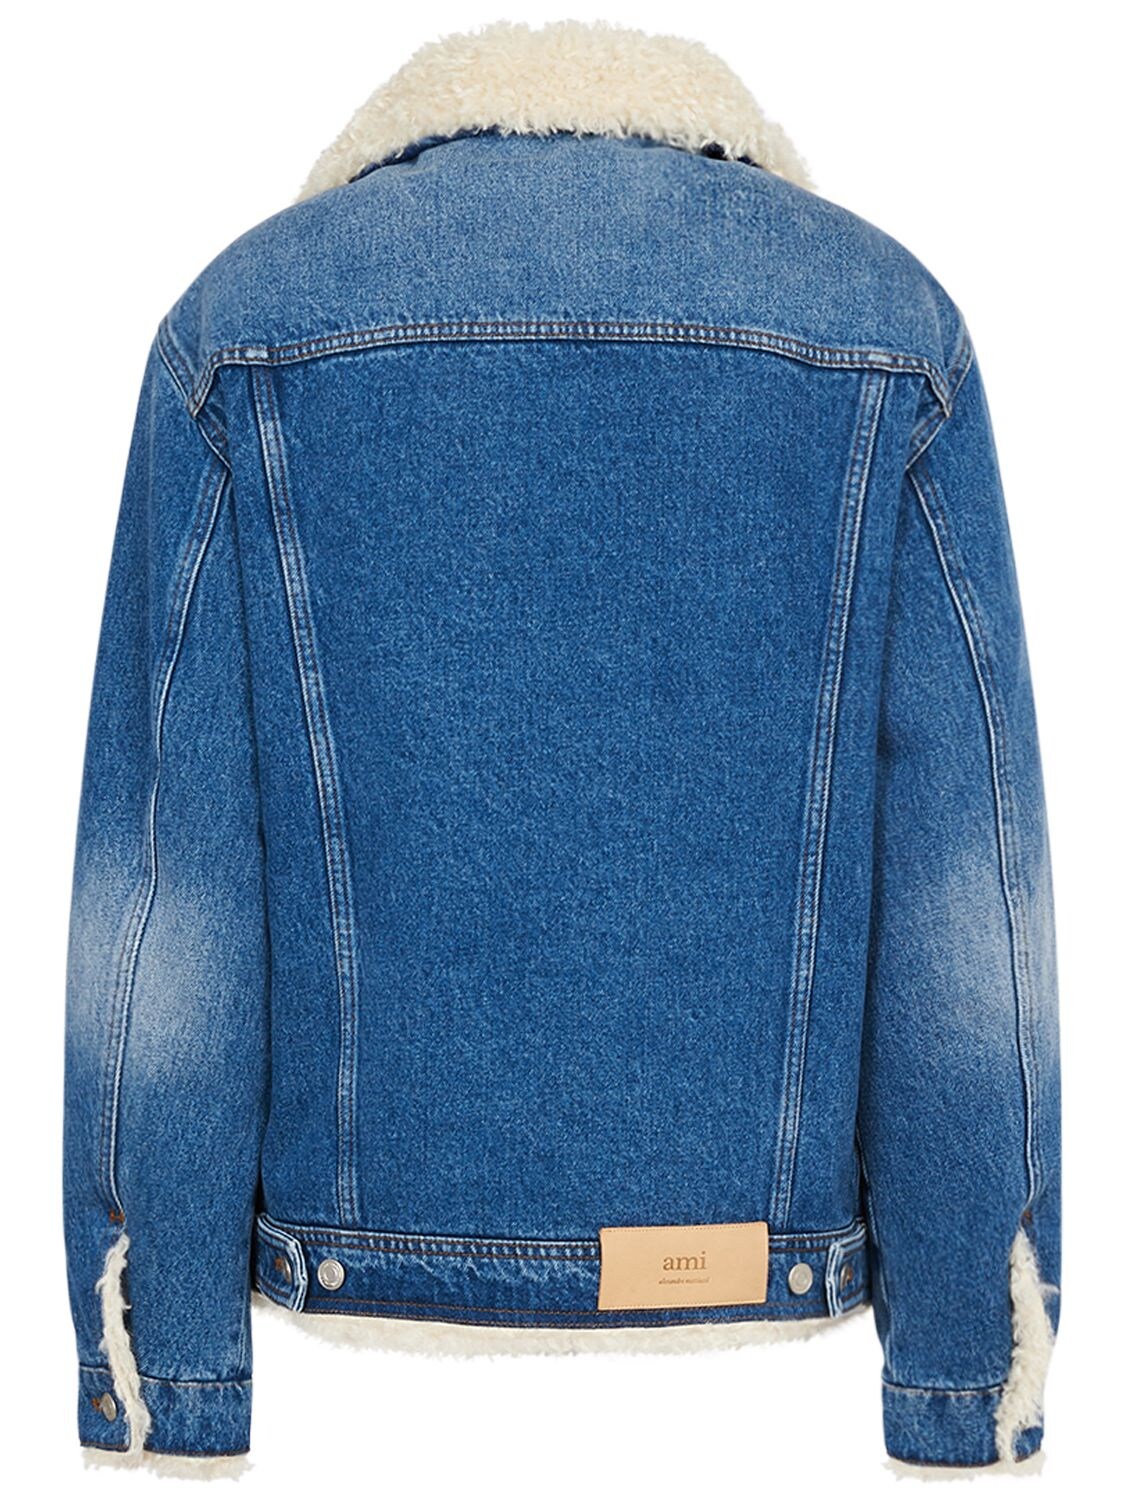 Shop Ami Alexandre Mattiussi Trucker Cotton Denim Jacket In Blue